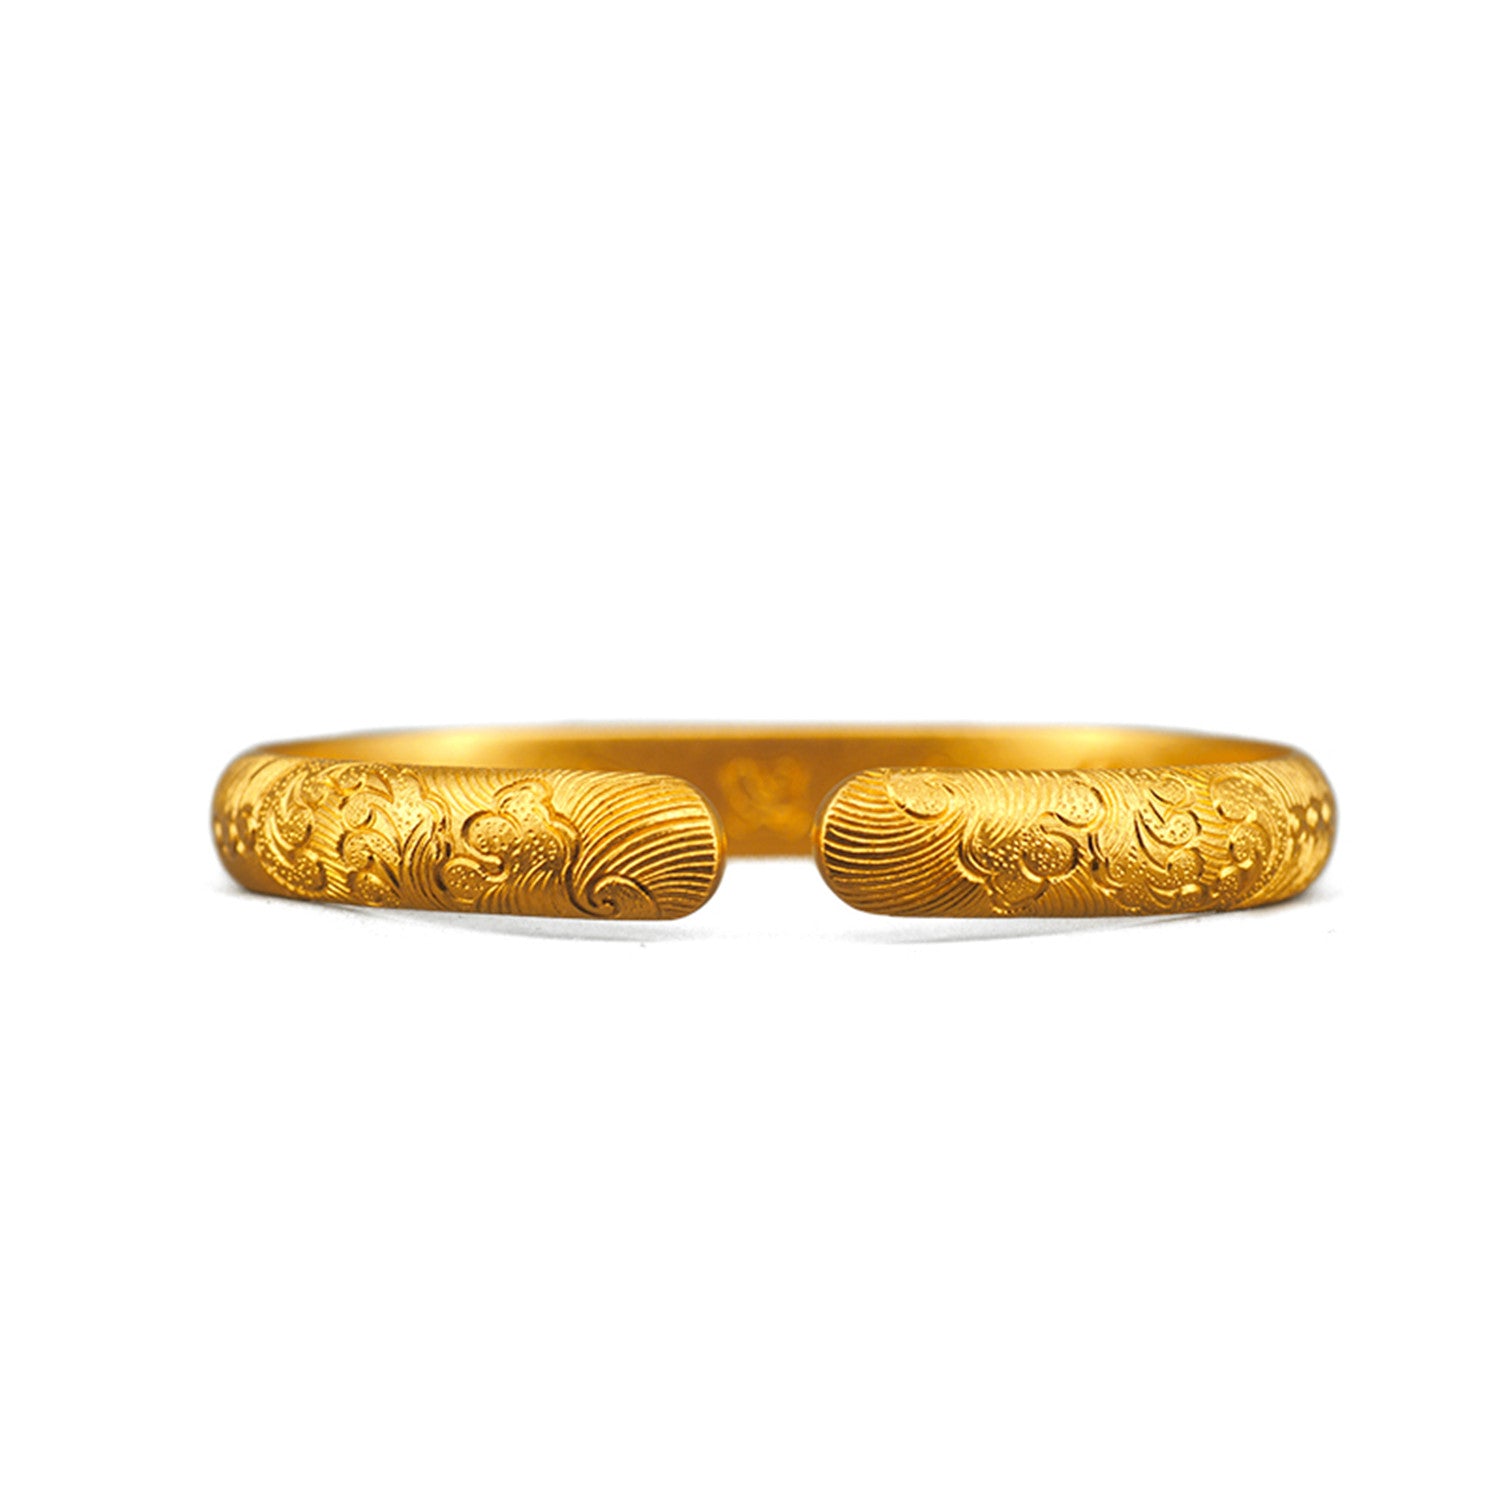 EVECOCO Full Gold Bracelet Hand Forging,Wave Pattern,45g